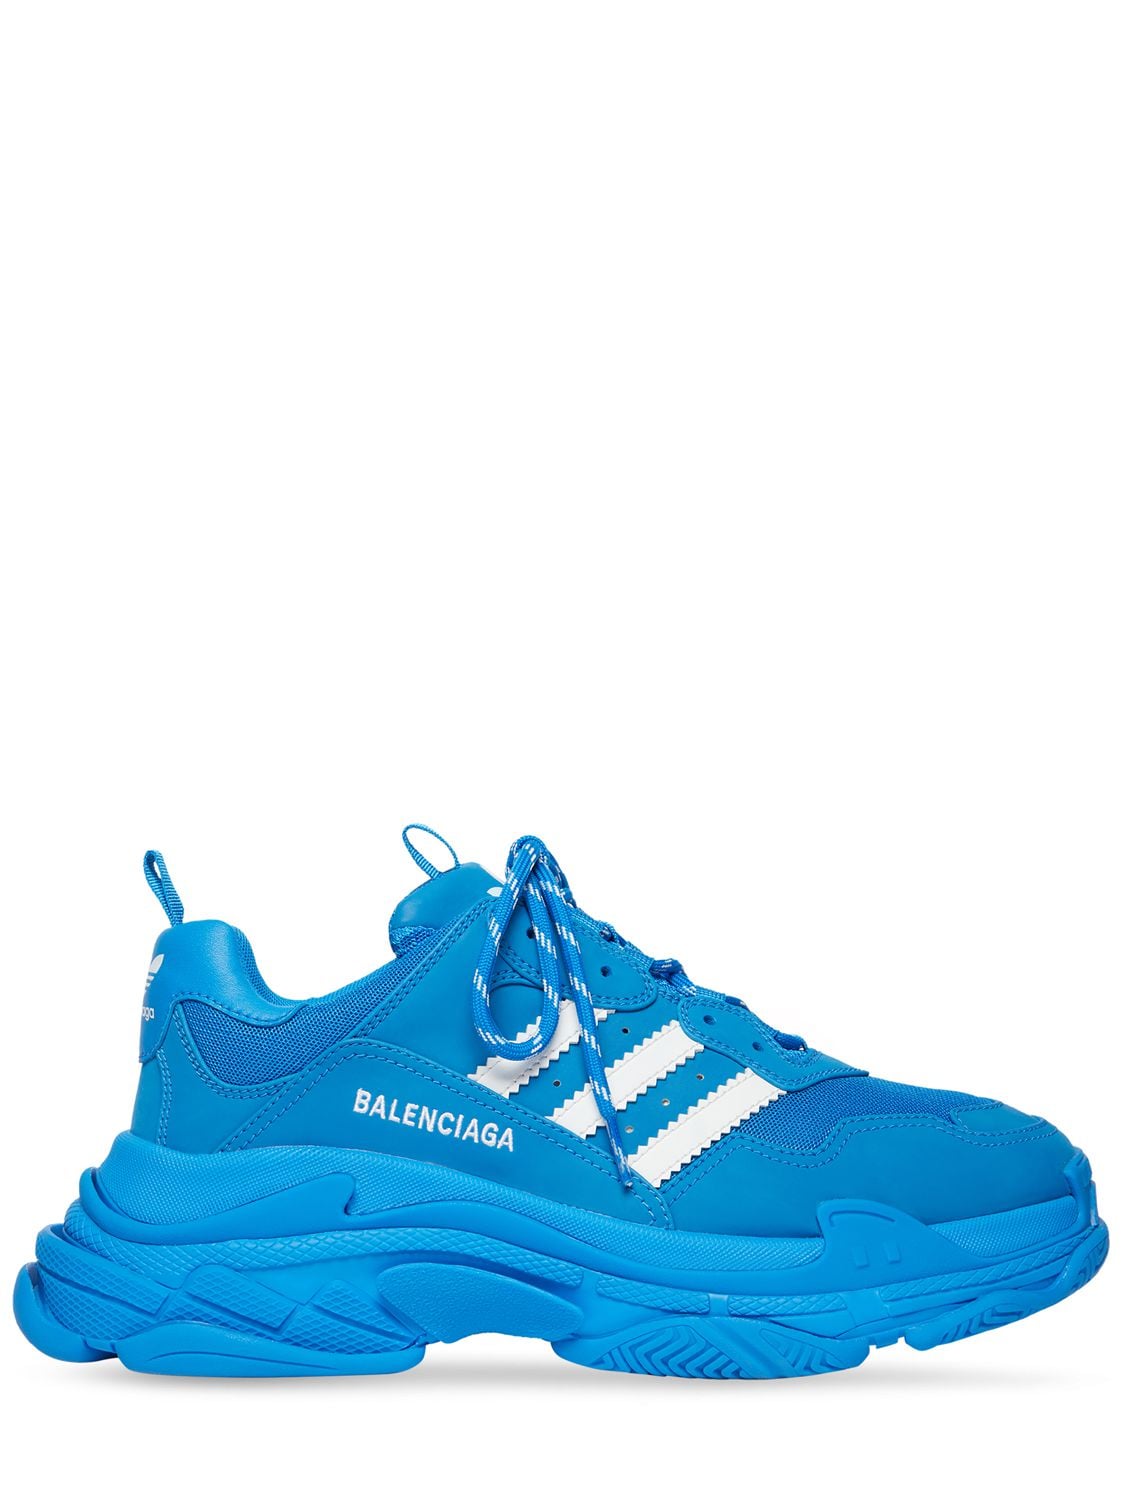 Balenciaga X Adidas Triple S Sneakers In Blue White